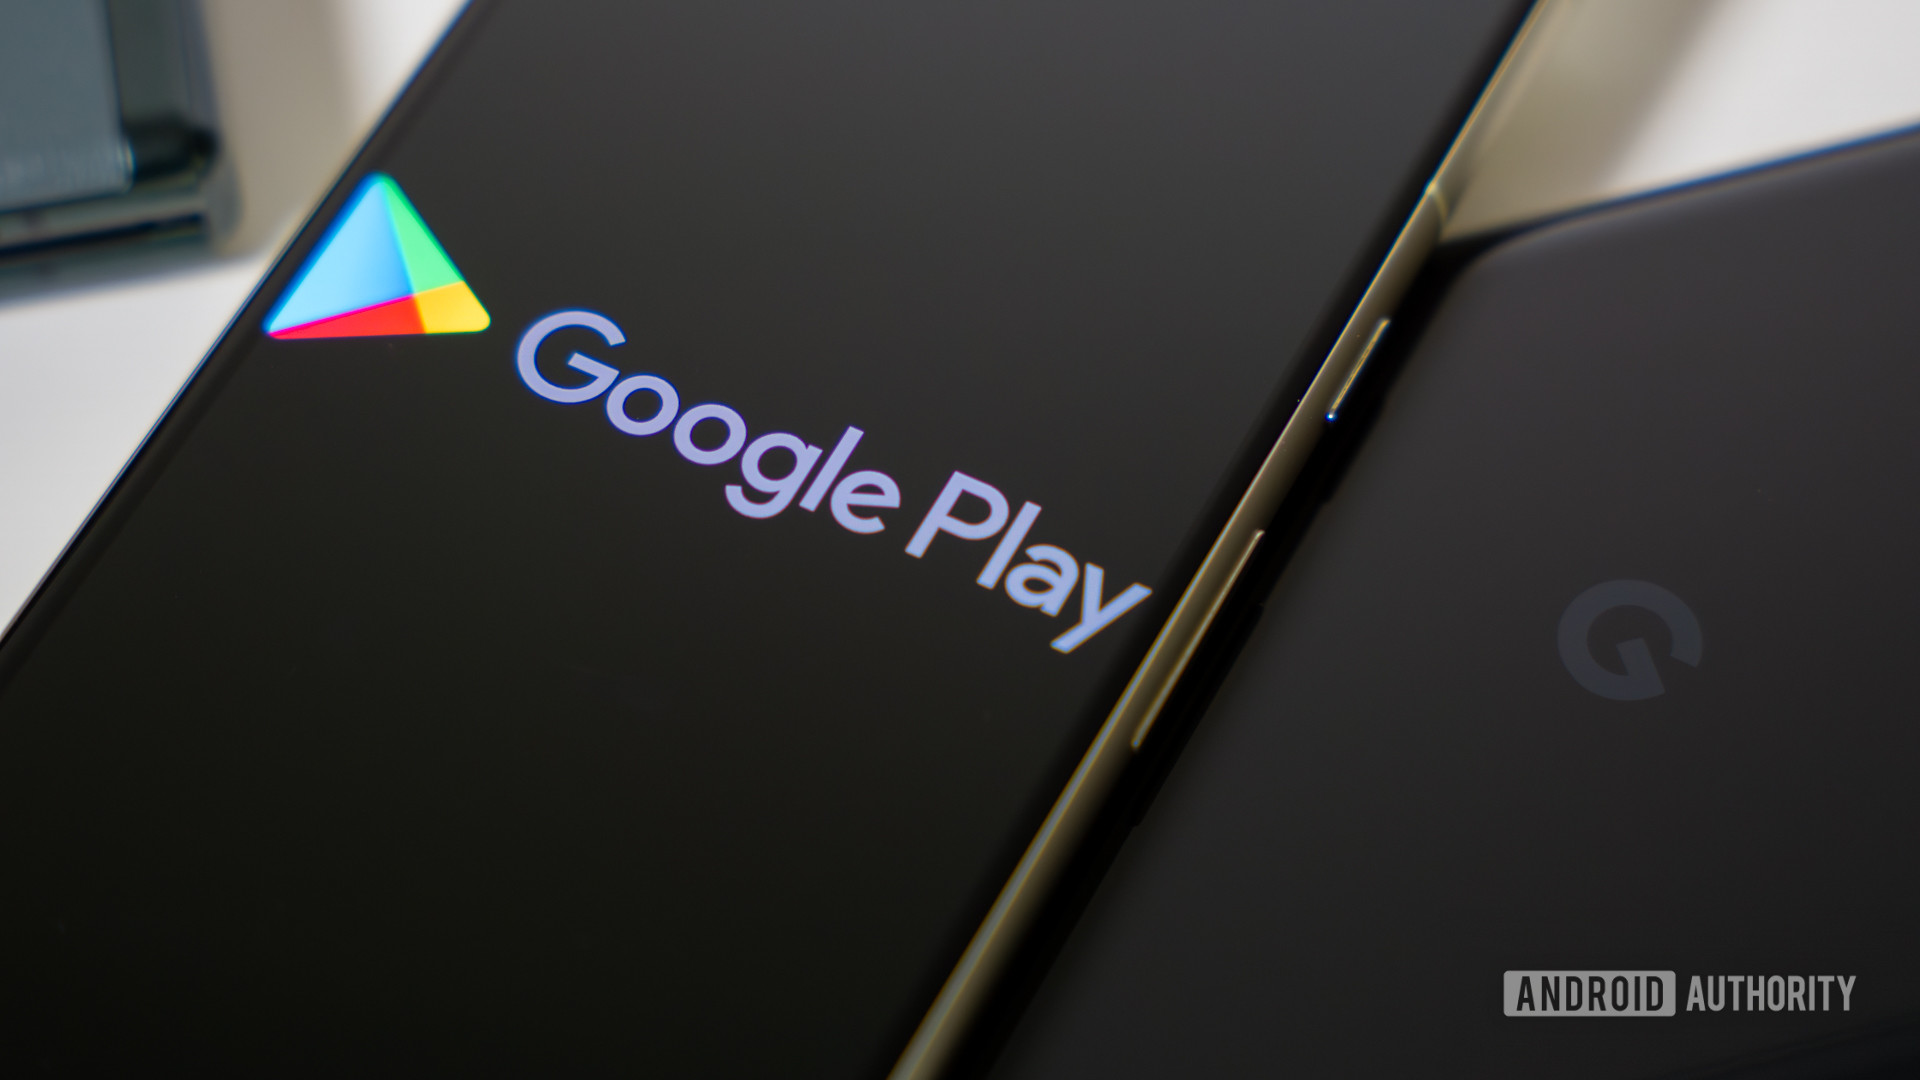 Google Play Store logo on smartphone stock photo (3)